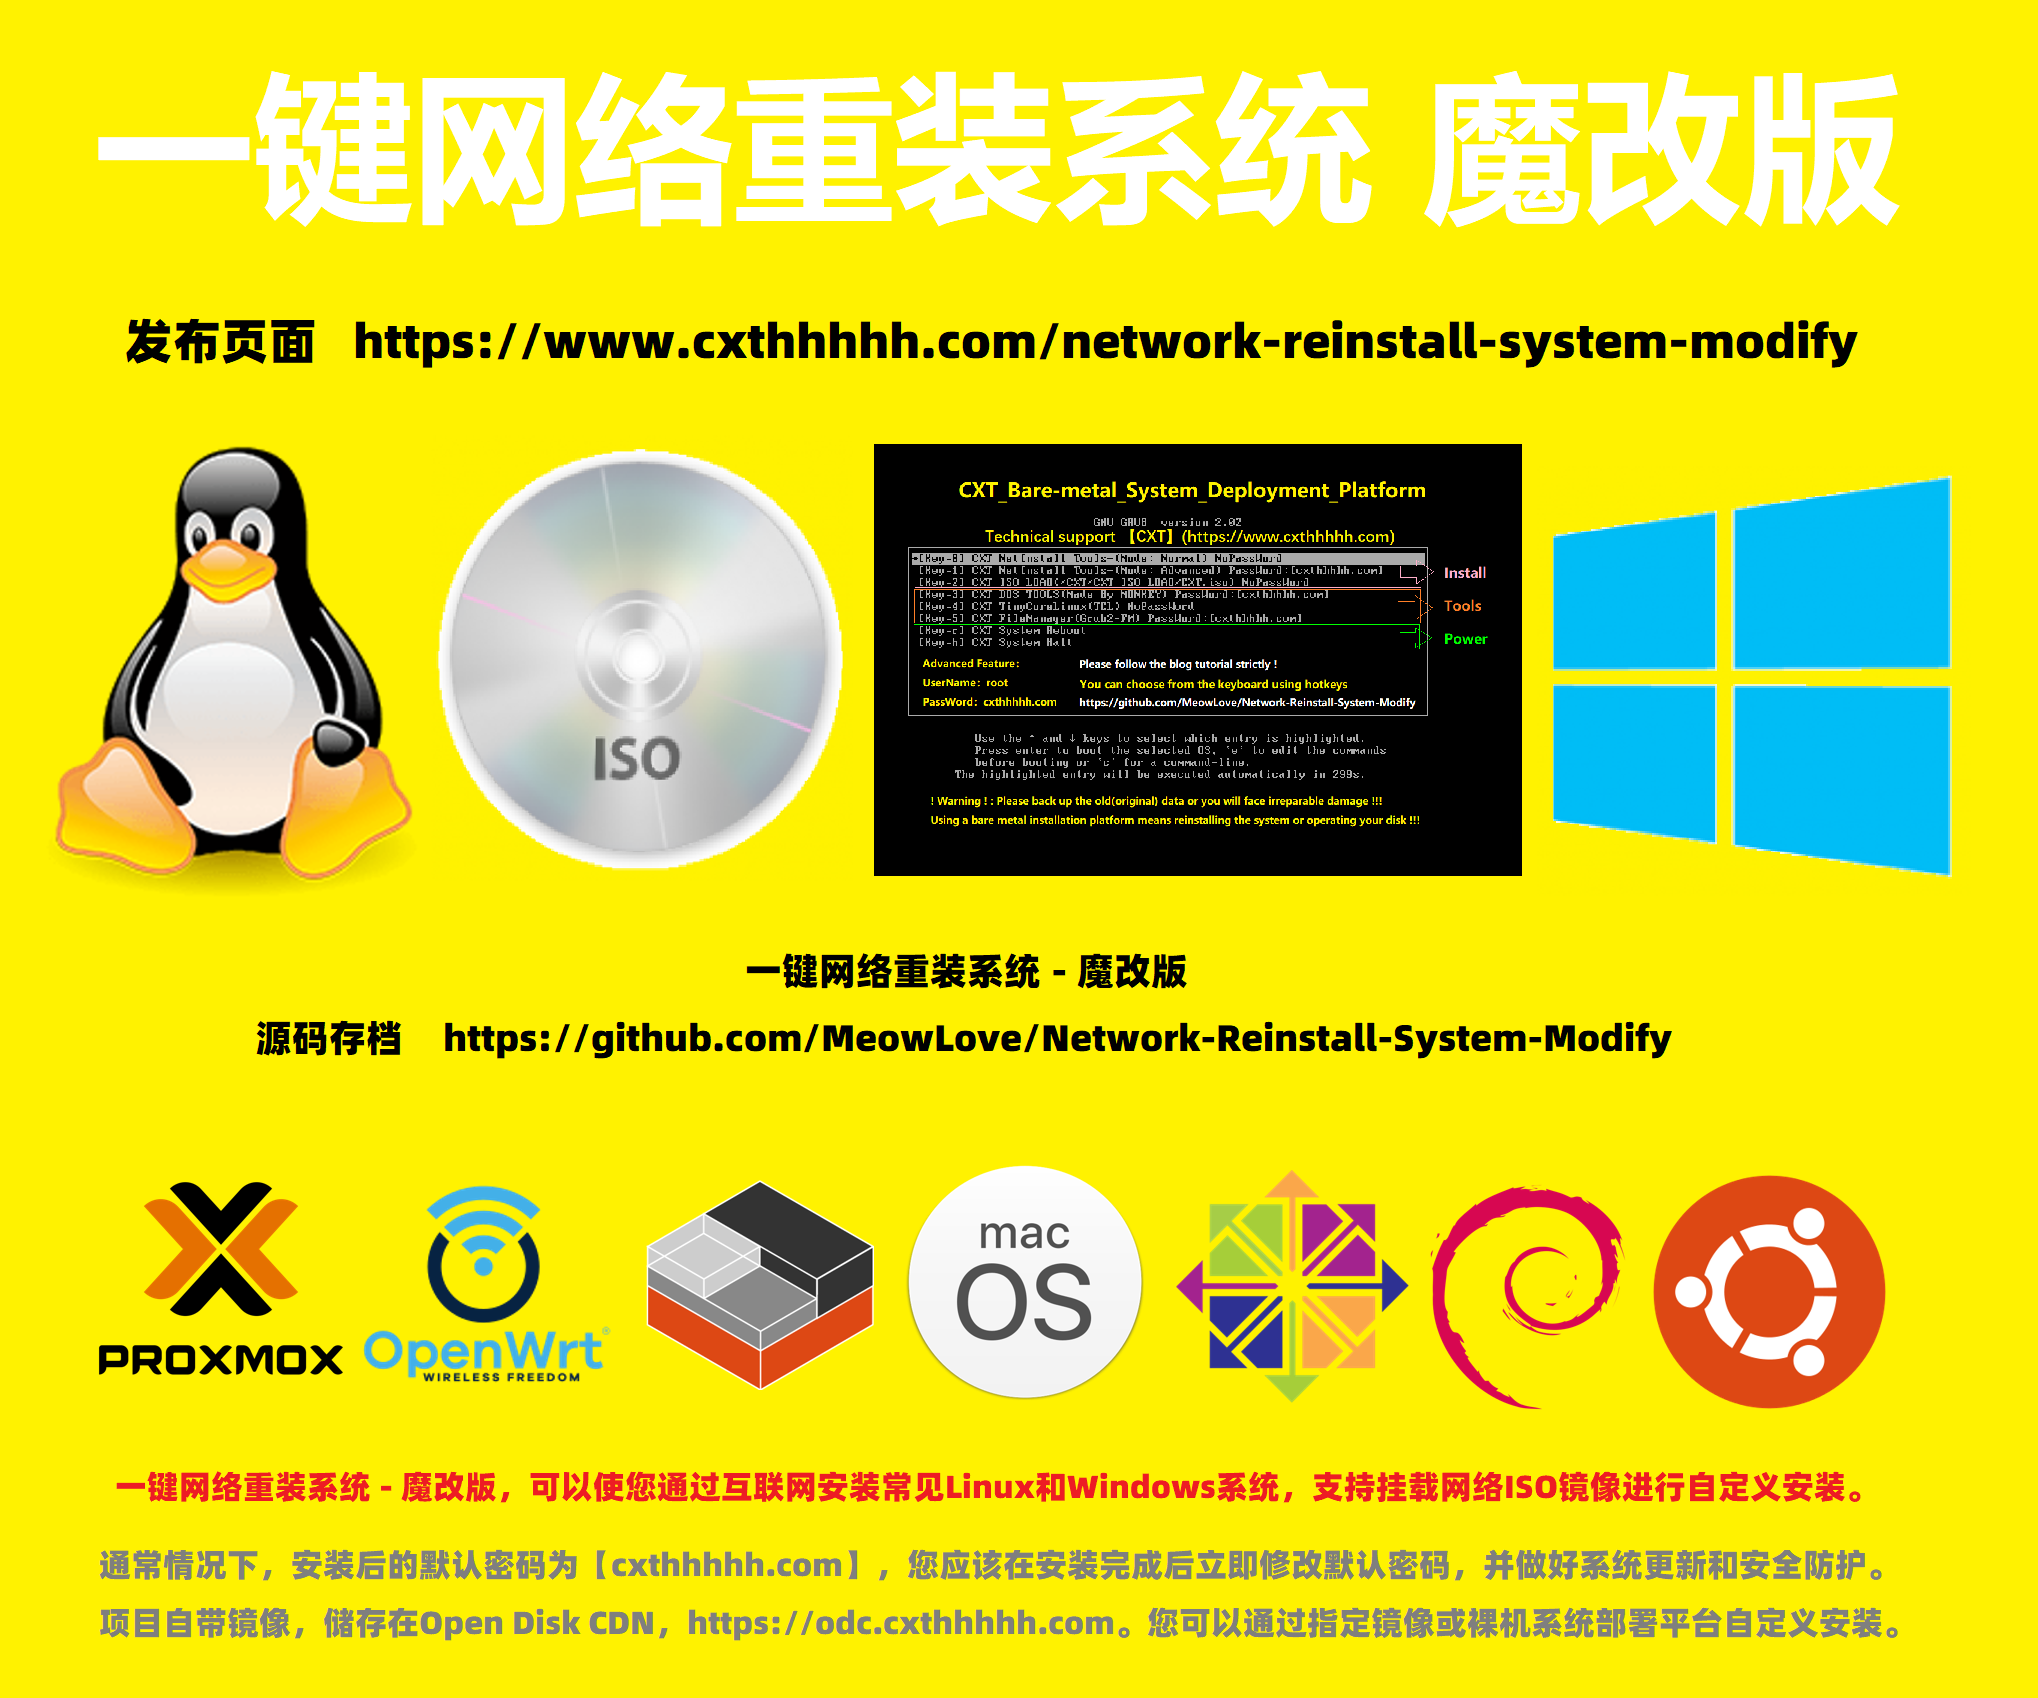 [Linux][DD]VPS一键网络重装系统 -魔改版(Network-Reinstall-System-Modify)-DoubleWorld’s